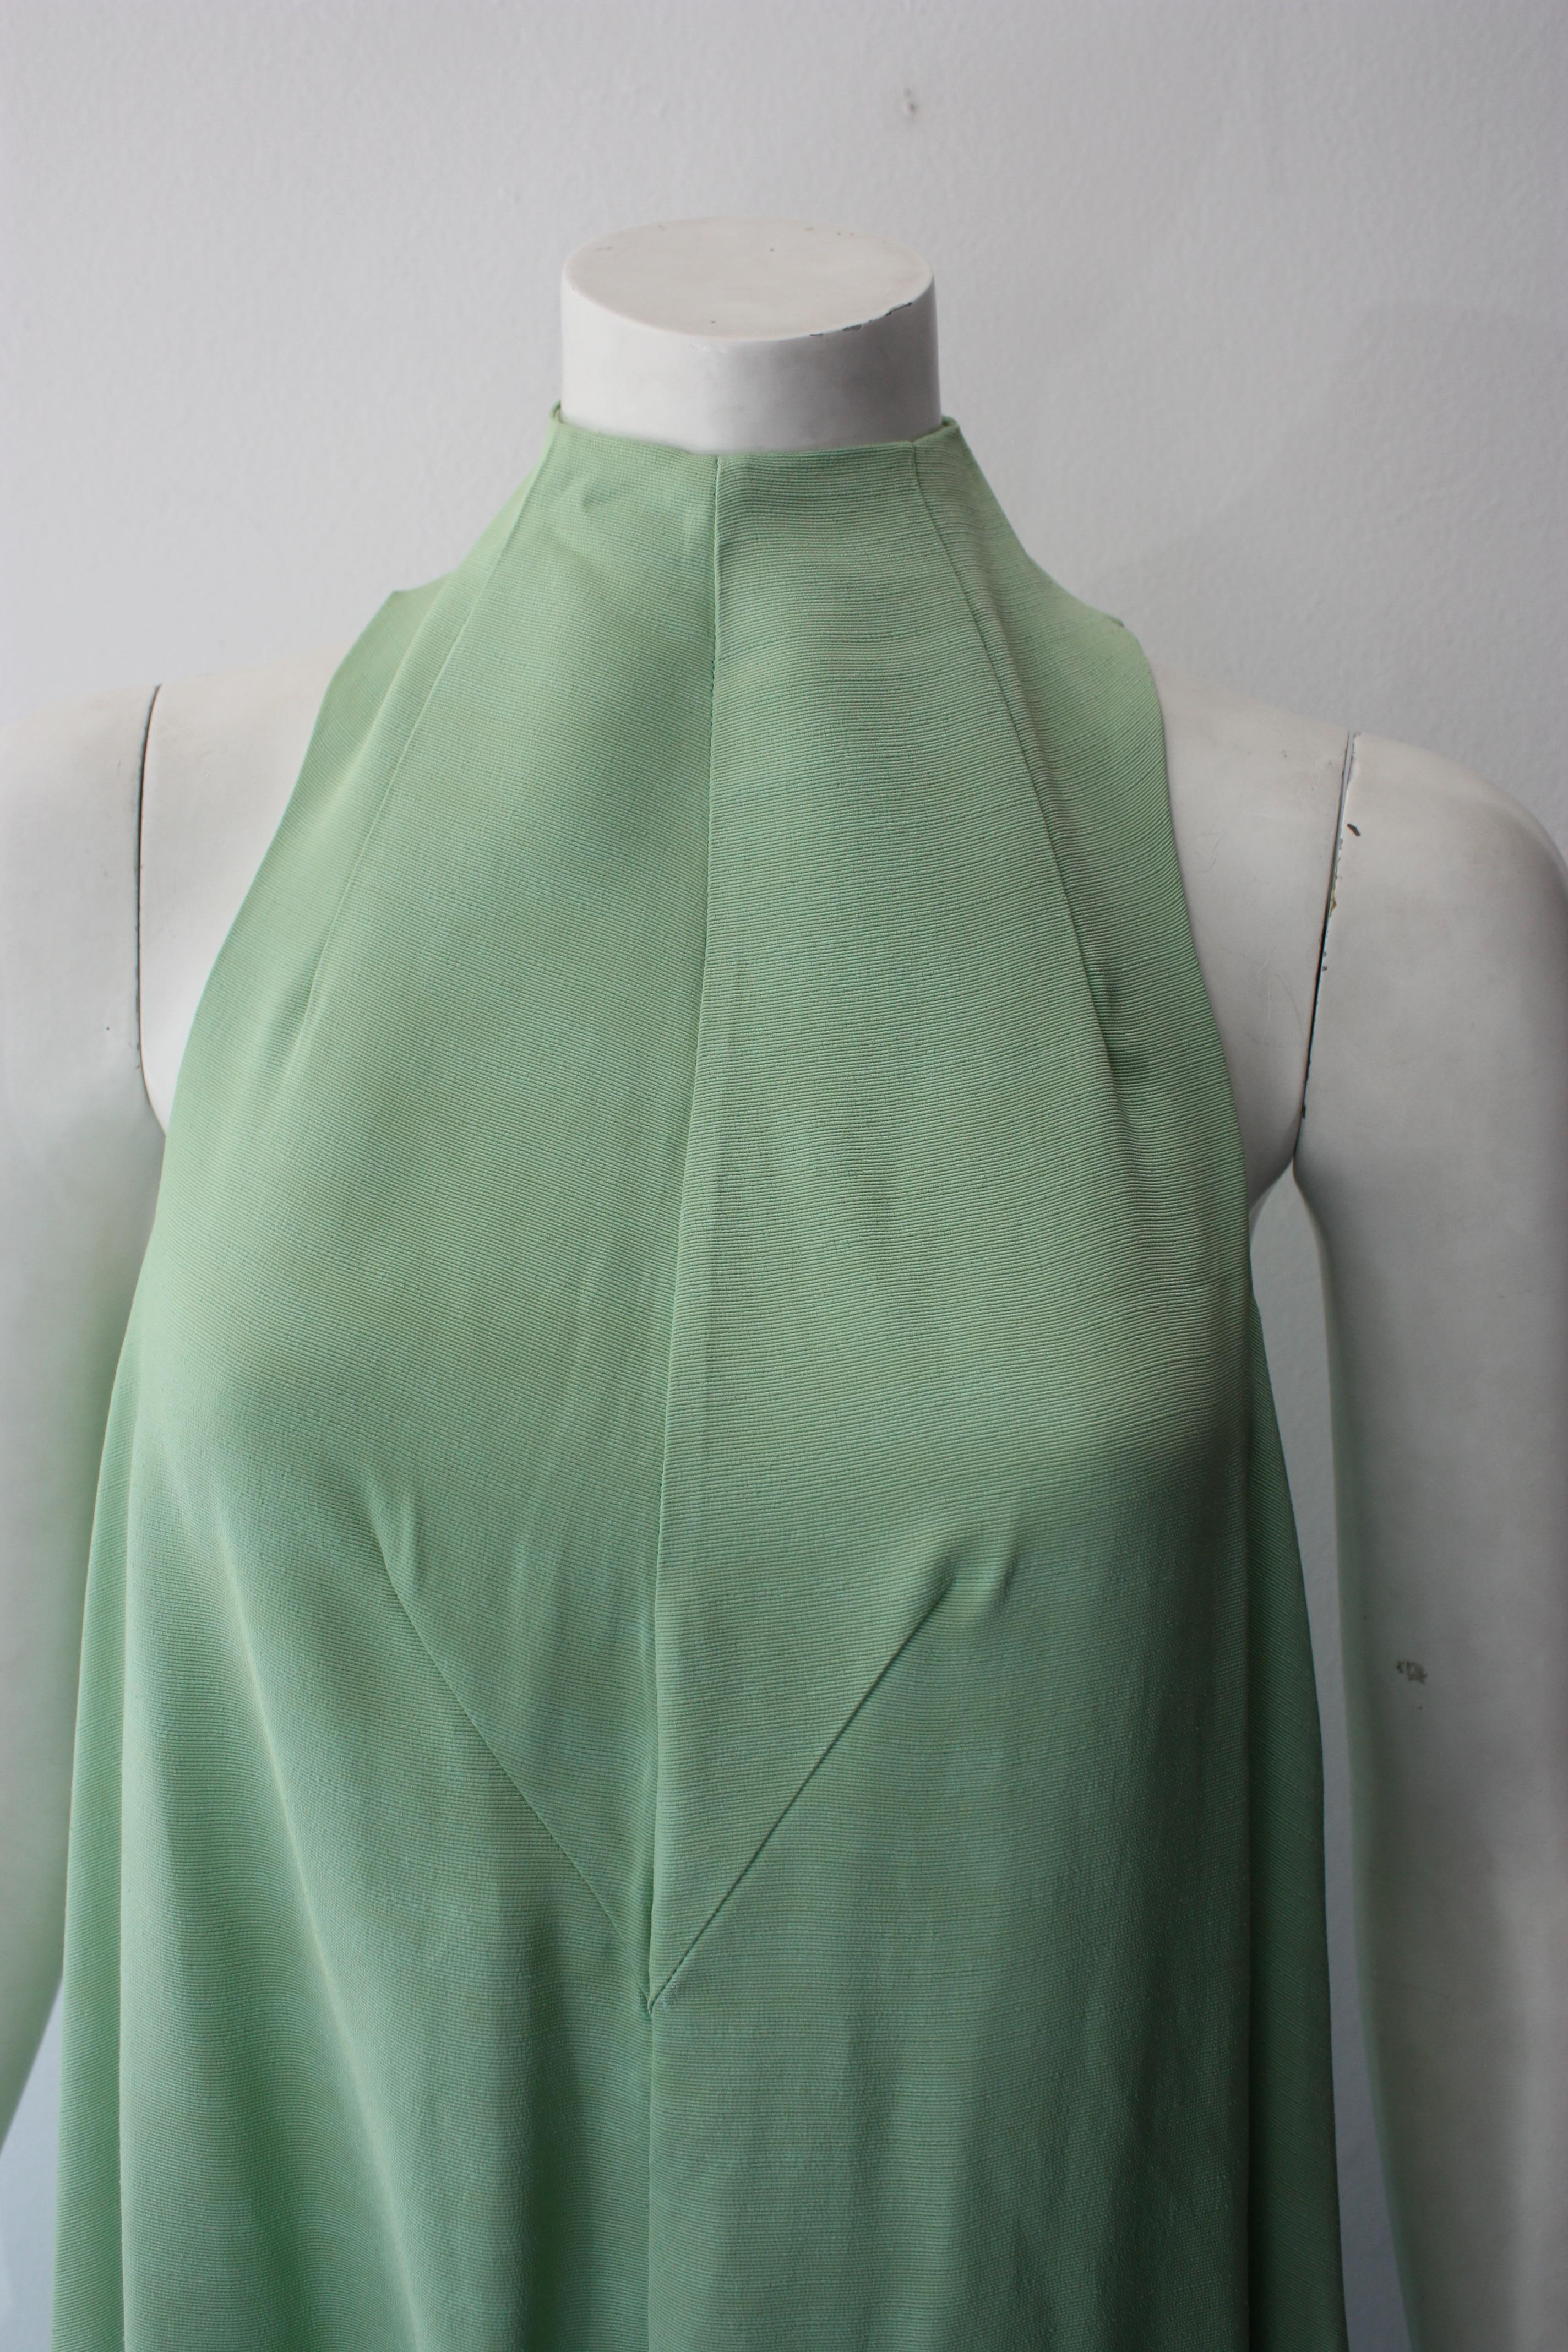 Mintgrünes ärmelloses Kleid von Cult Gaia. Mokka-Ausschnitt. Asymmetrisch drapierter Saum. Verdeckter Reißverschluss am Rücken und Bindeband im Nacken. 
Größe M
100% Viskose.
Neu mit Tags.